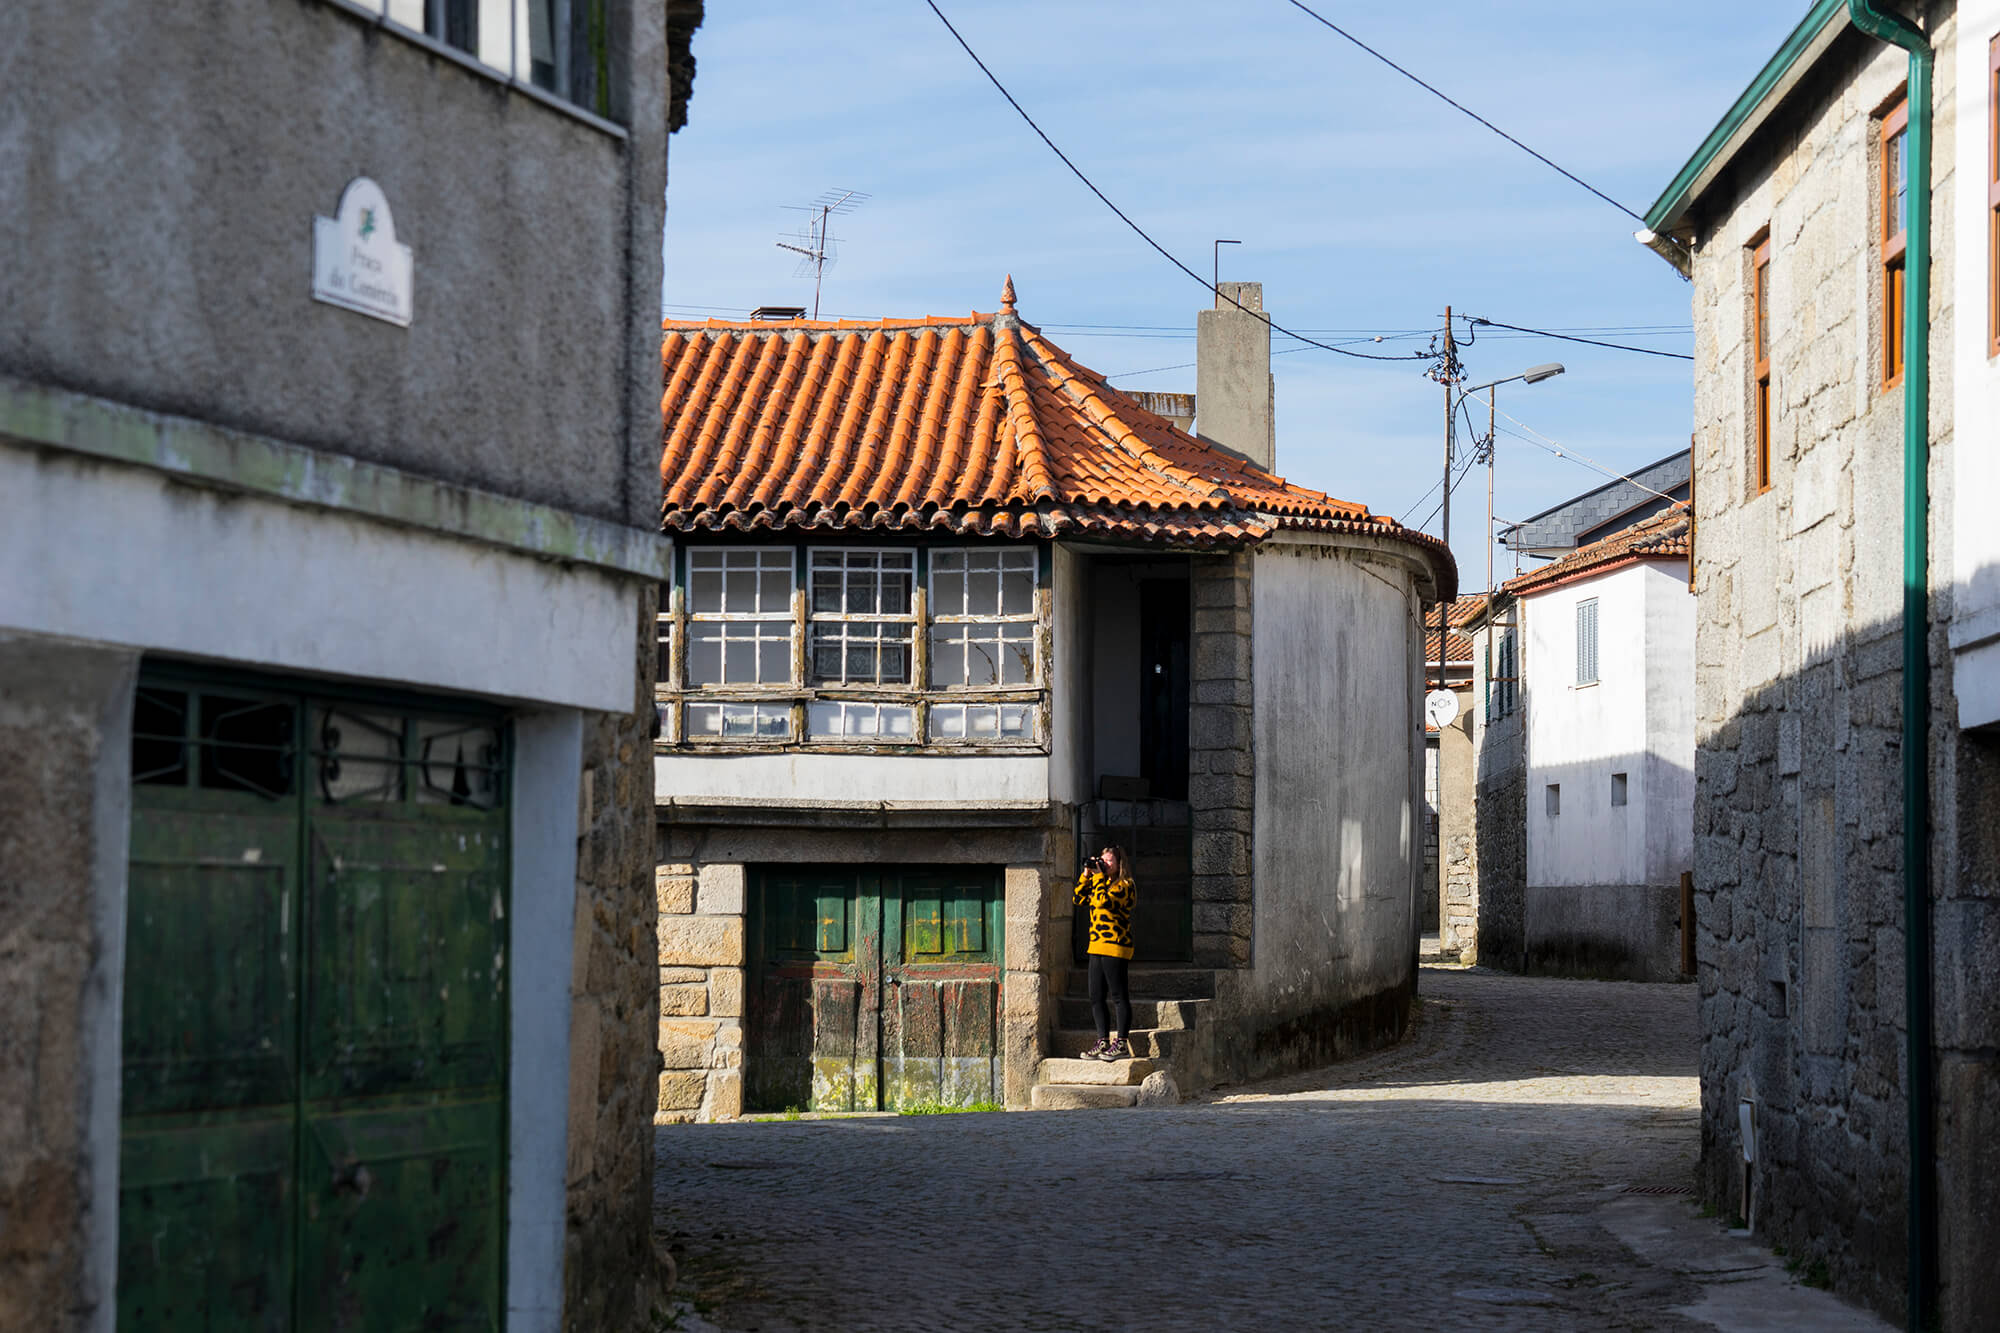 Guía del municipio de Vinhais en Portugal.